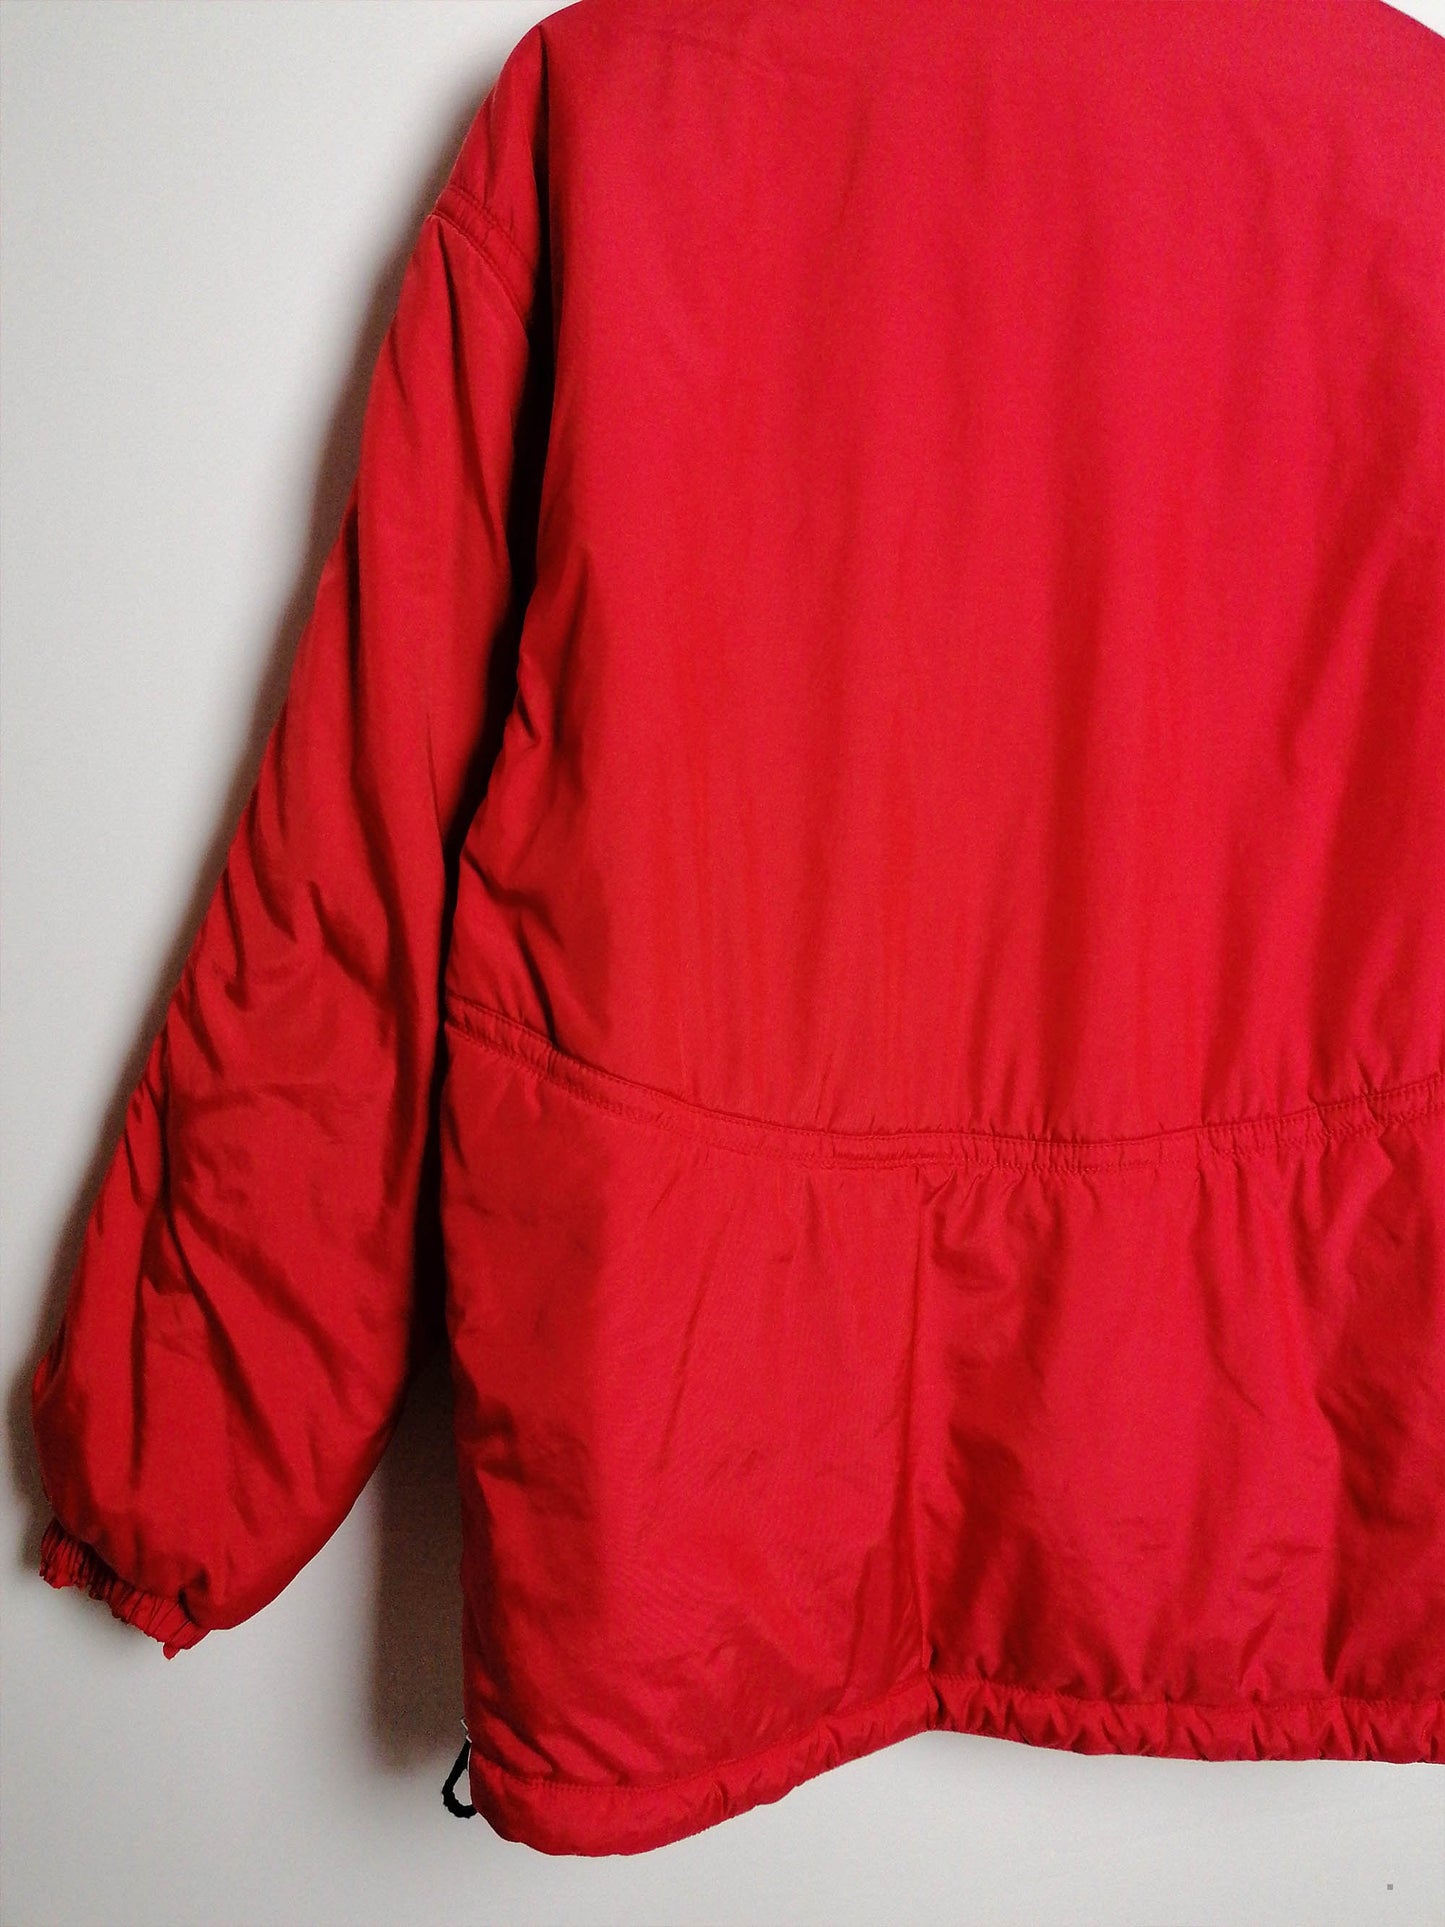 90's SPORTALM Kitzbuhel Anorak Shiny Red Winter Ski Jacket - size S-M